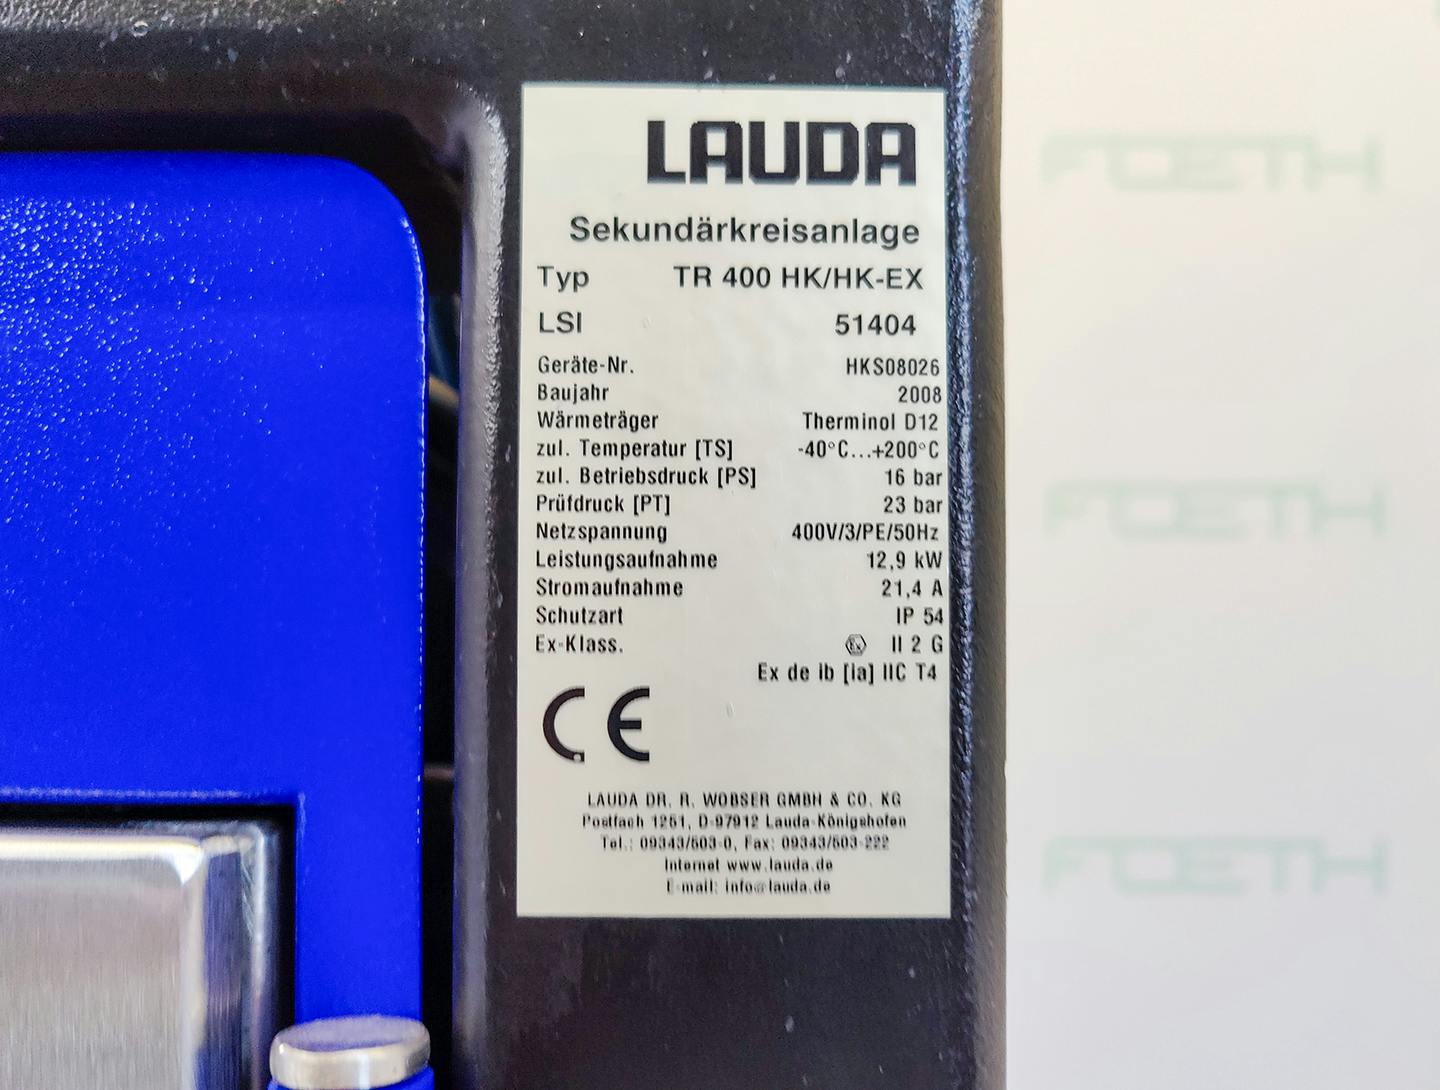 Lauda TR400 HK/HK-EX "secondary circuit system" - Thermorégulateur - image 14